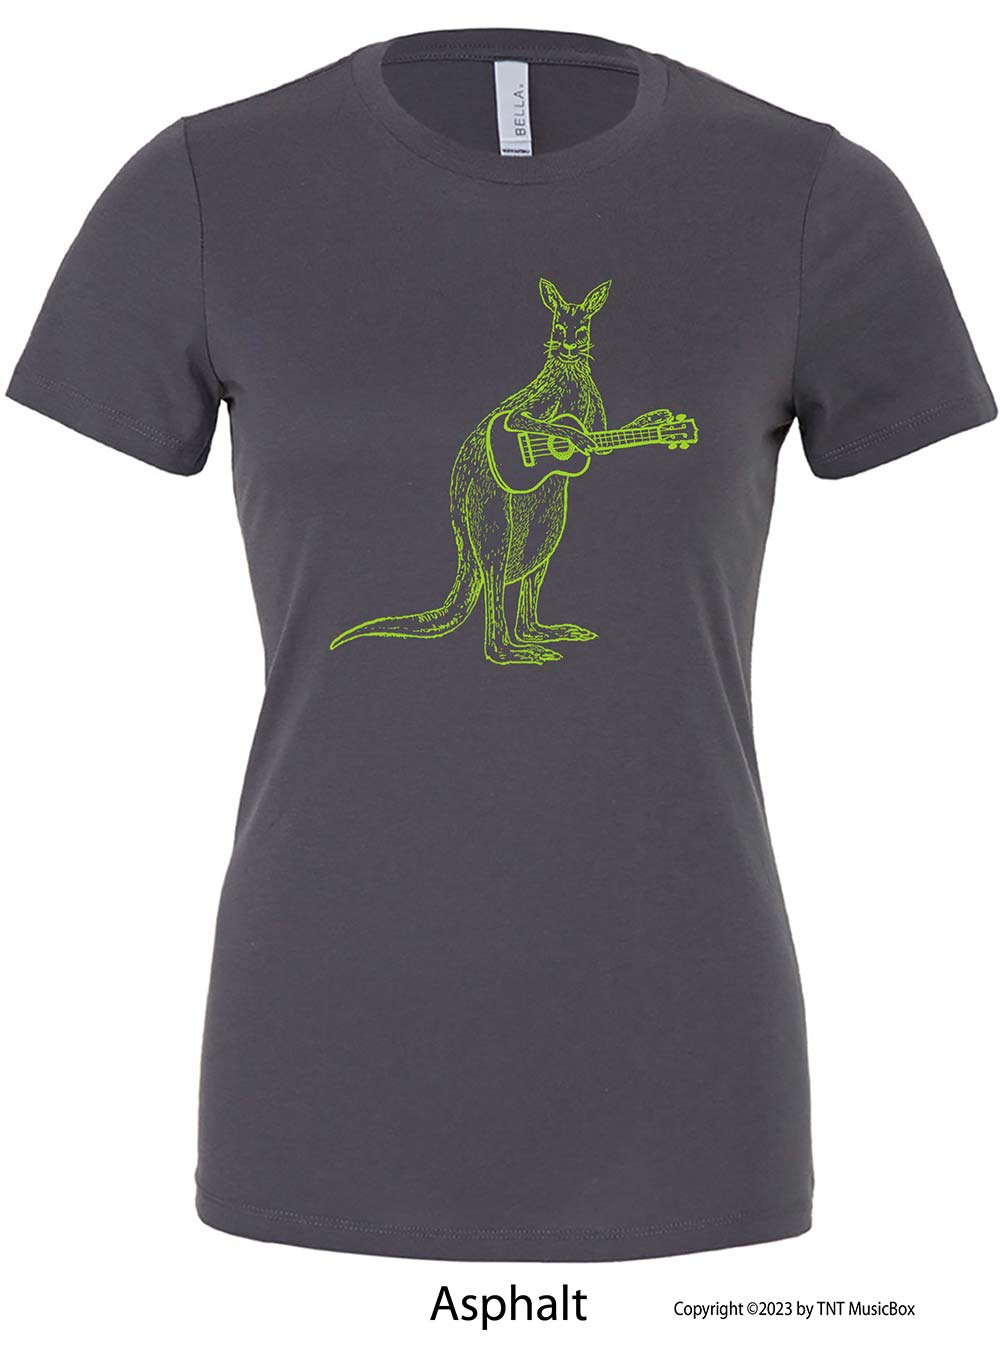 Kangaroo Playing Ukulele on an asphalt shirt